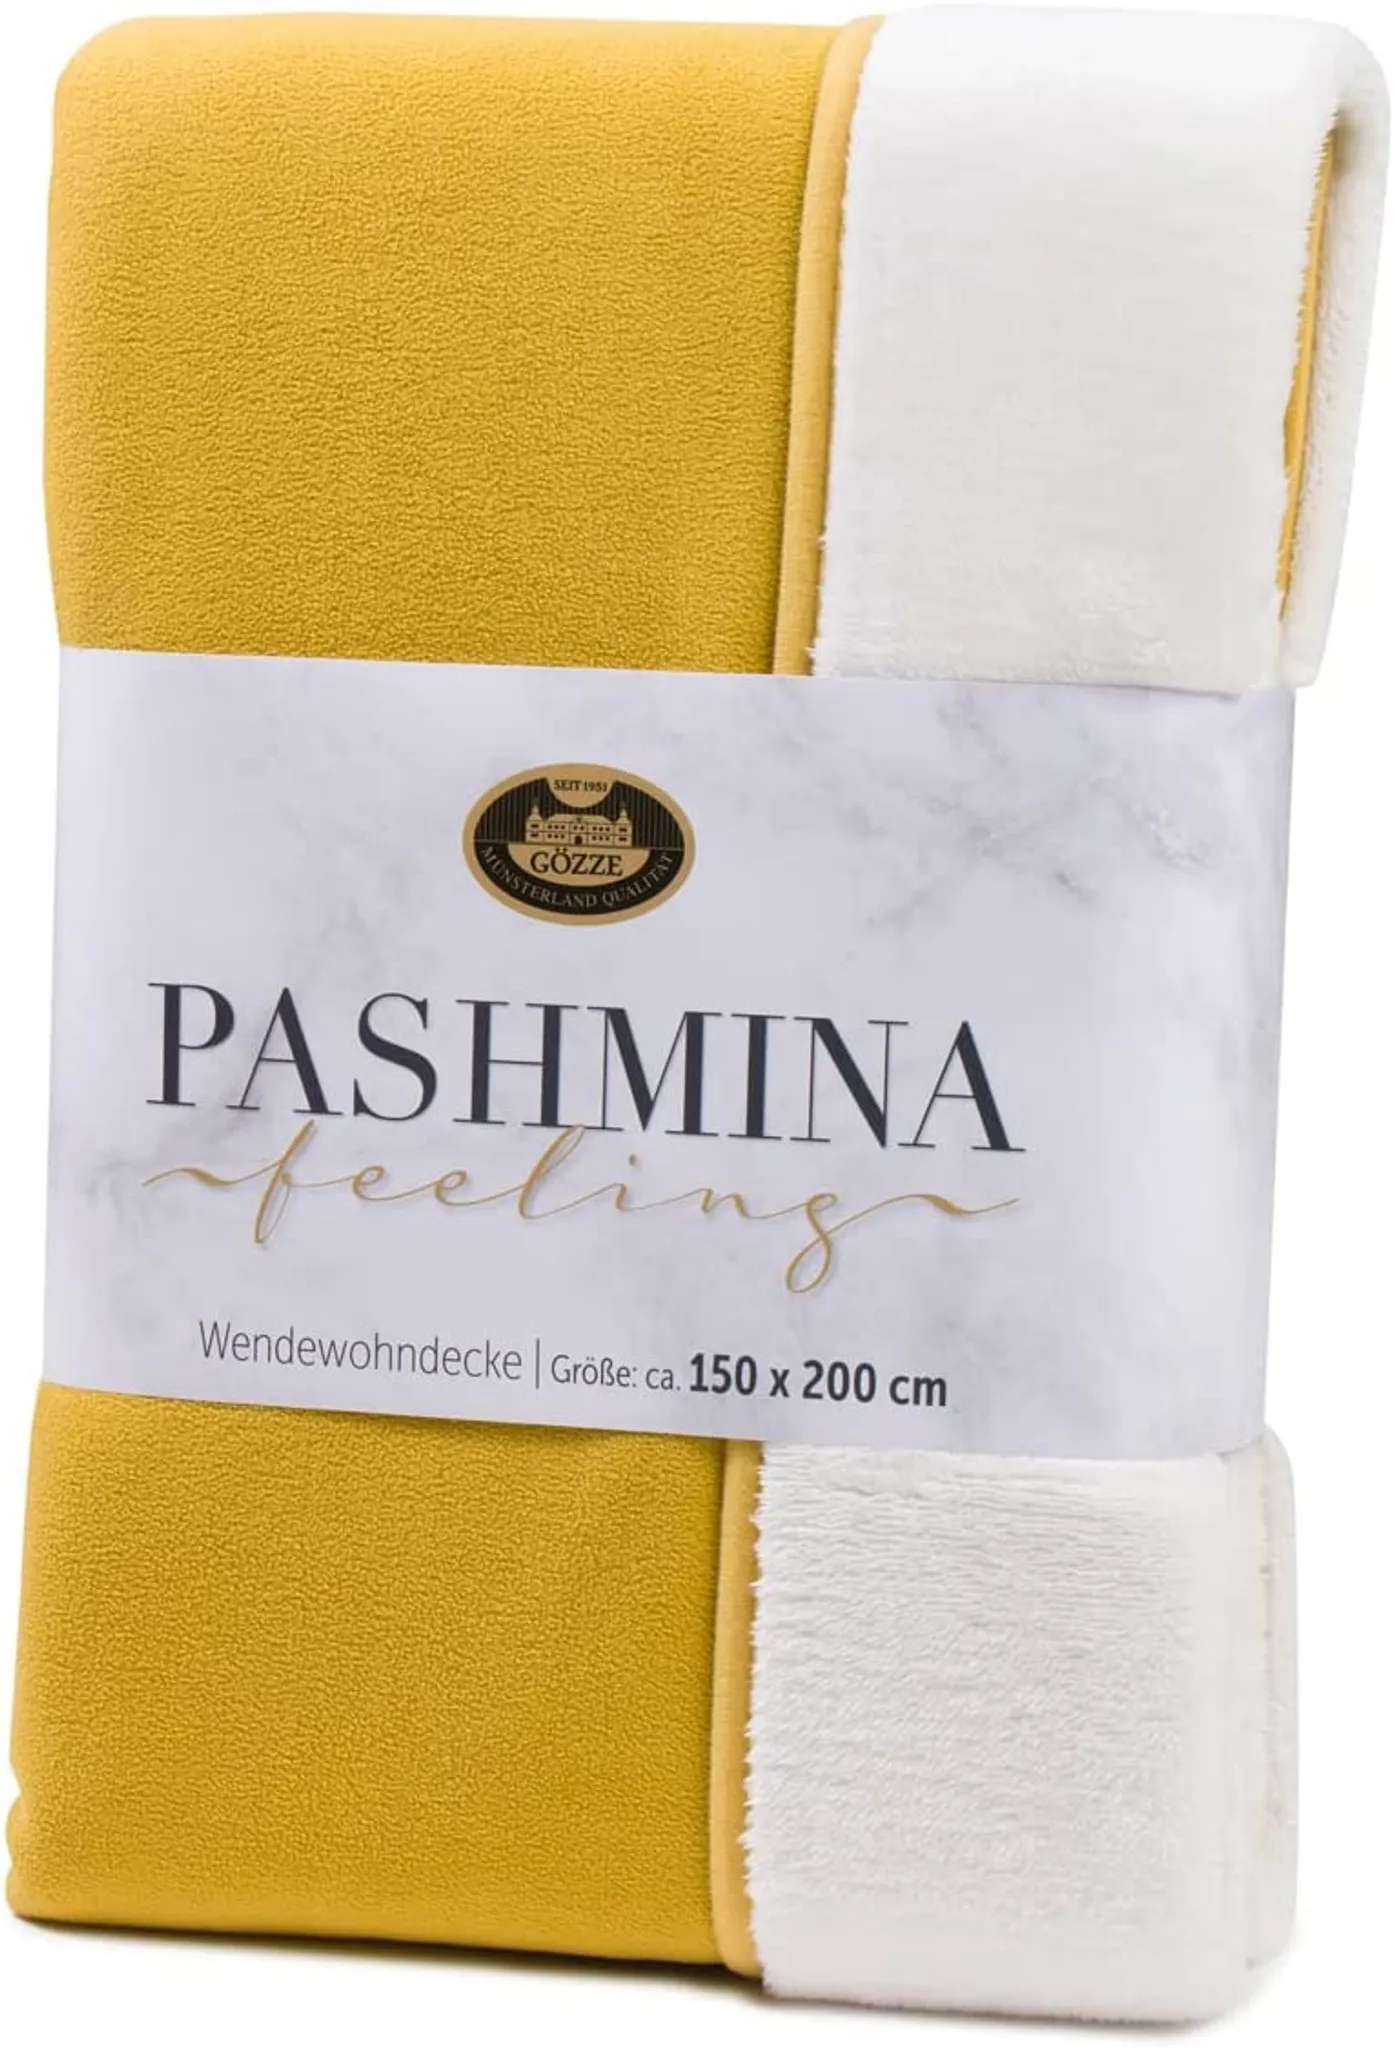 Pashmina-Feeling Wendewohndecke 150 uni Gözze